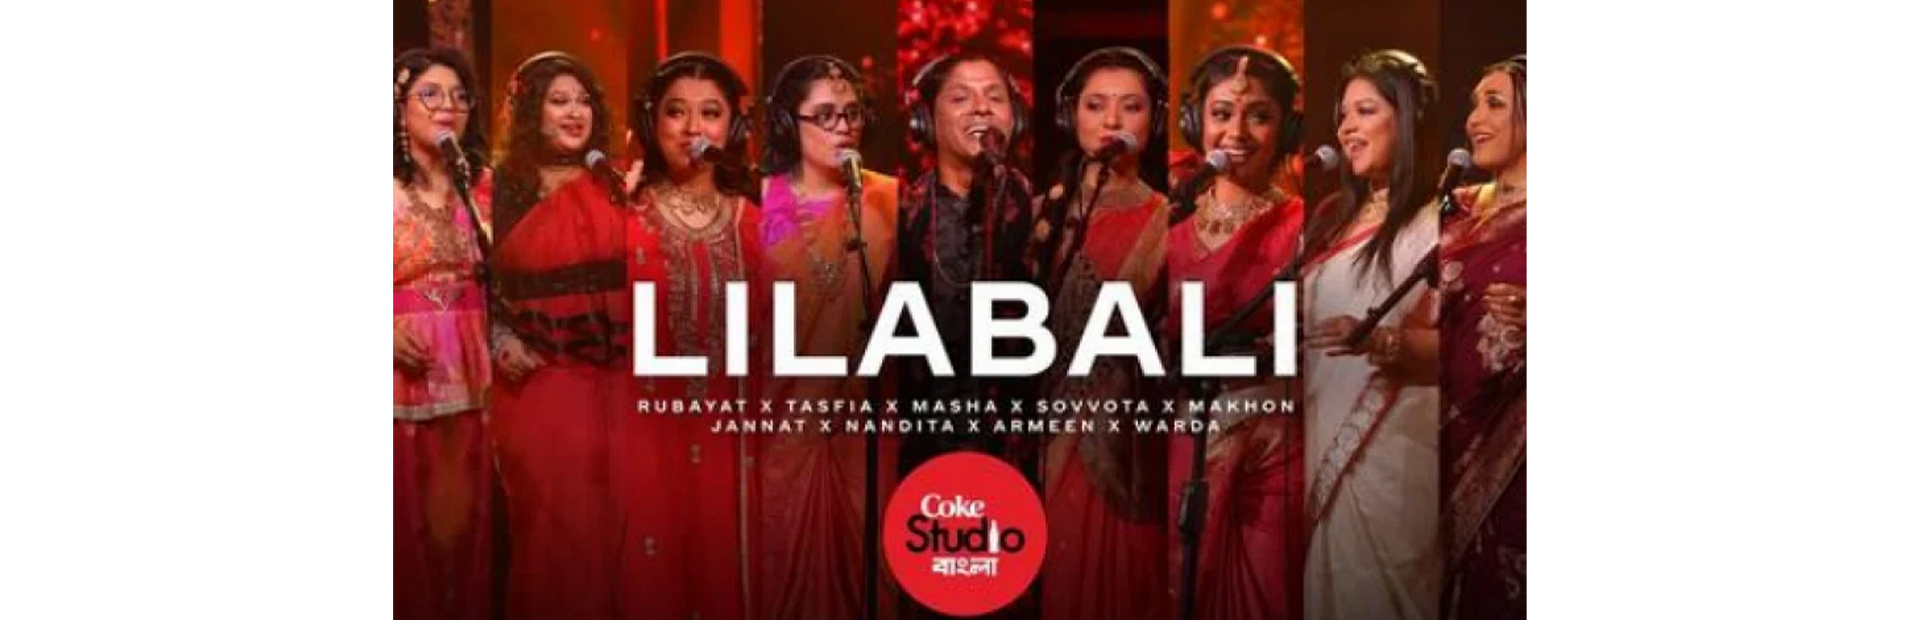 9 singers singing “Lilabali”